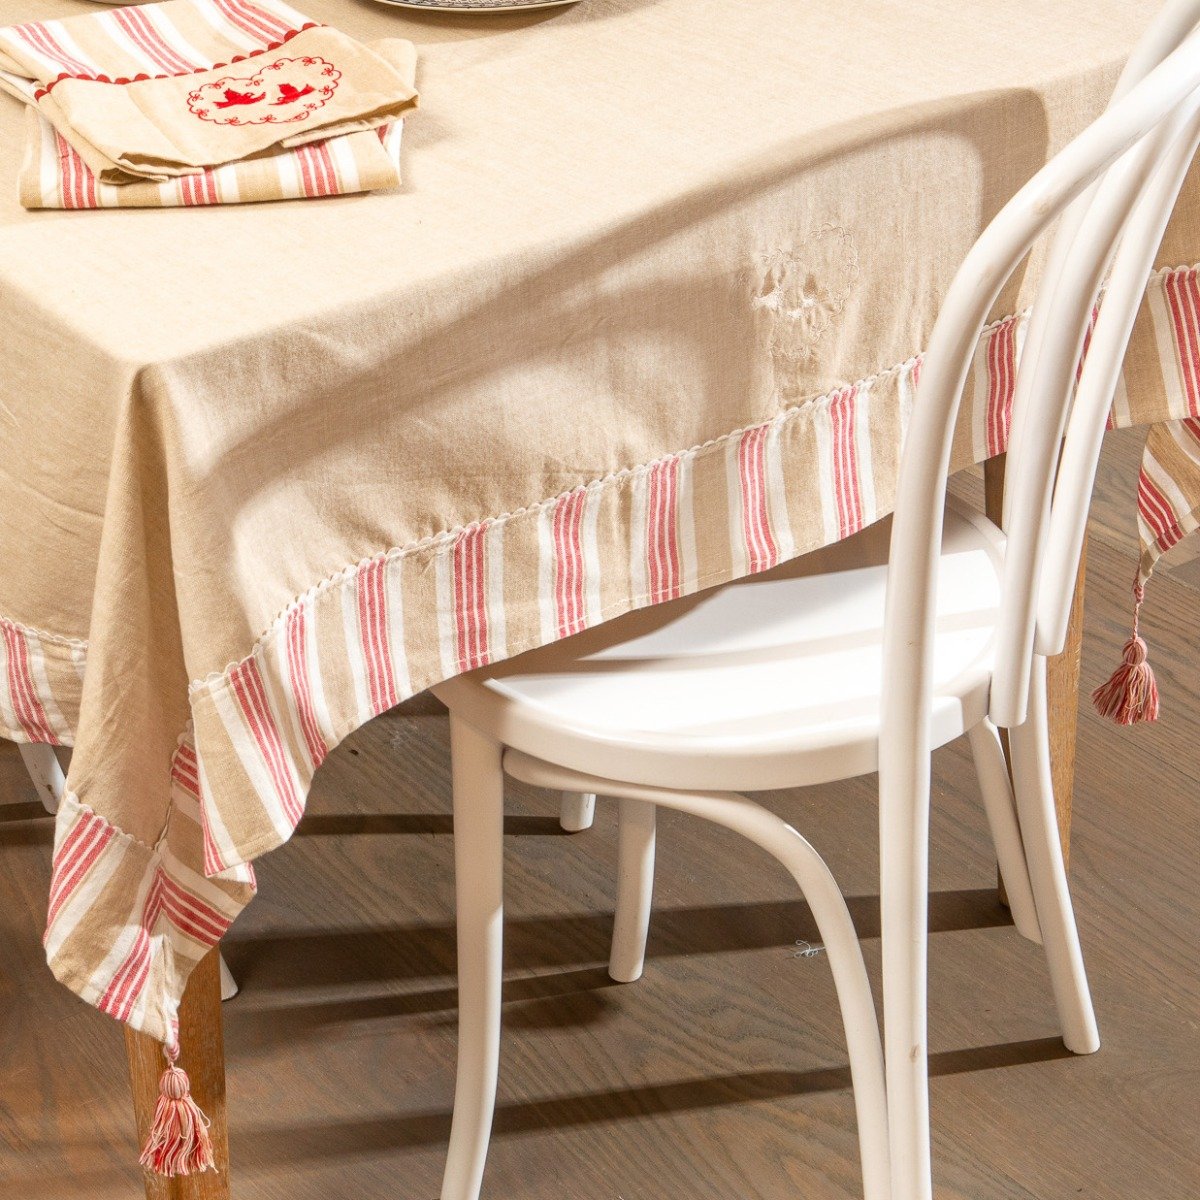 Handloom Cotton Woven Tablecloth - Beige